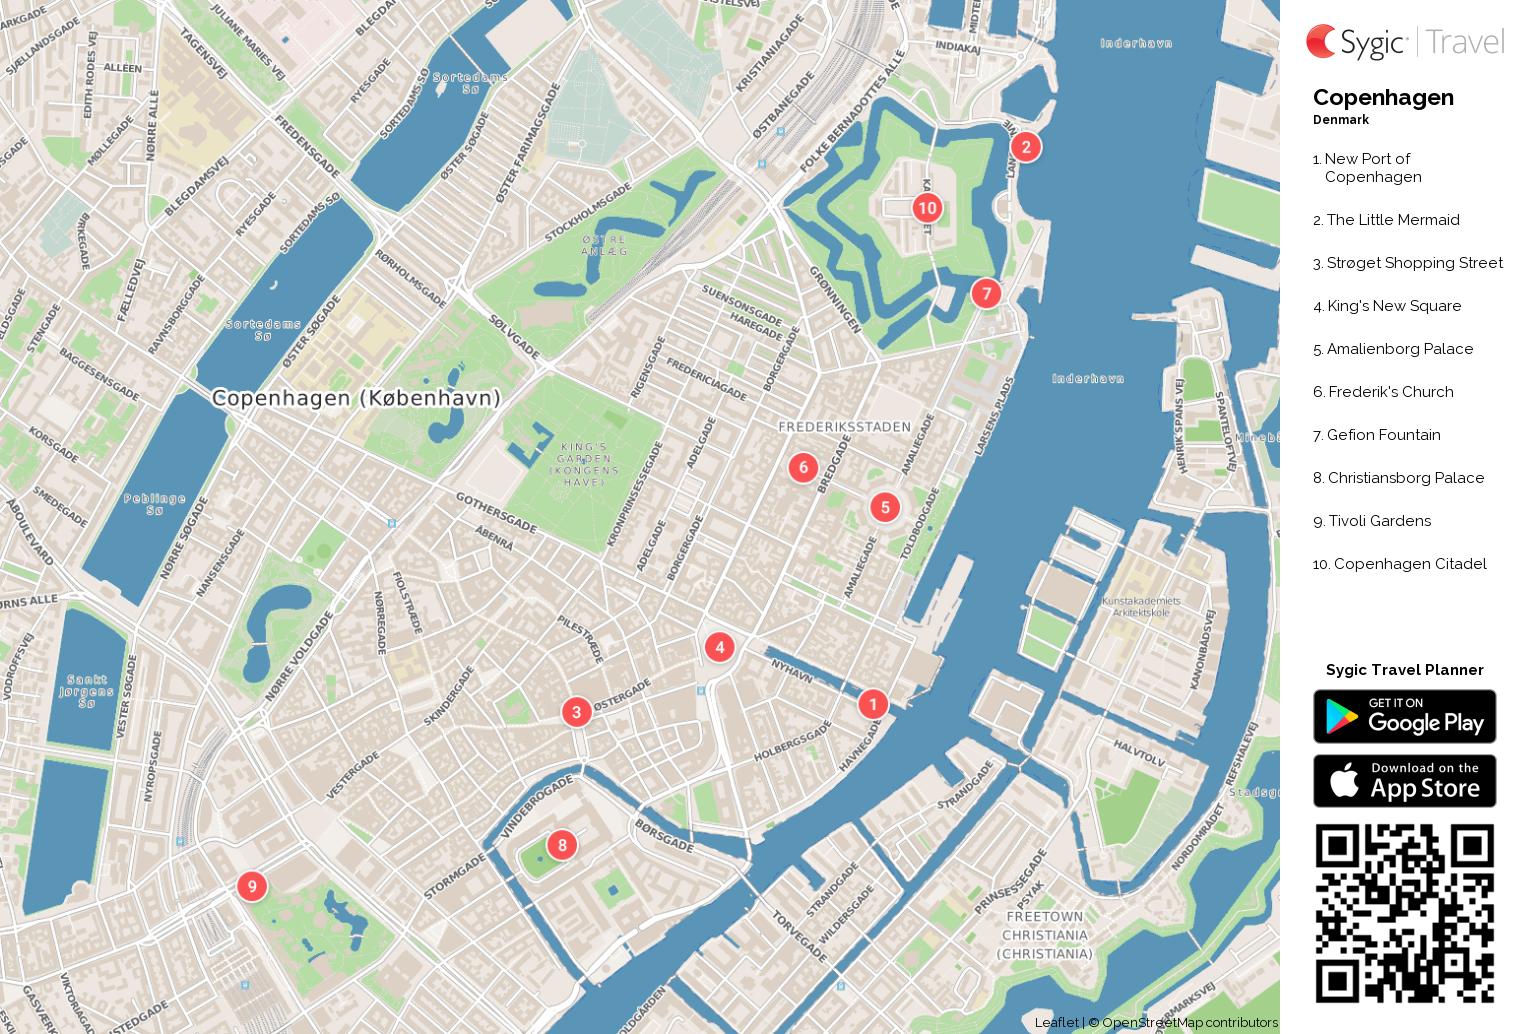 Mappa di Copenaghen a piedi: tour a piedi e percorsi a piedi di Copenaghen